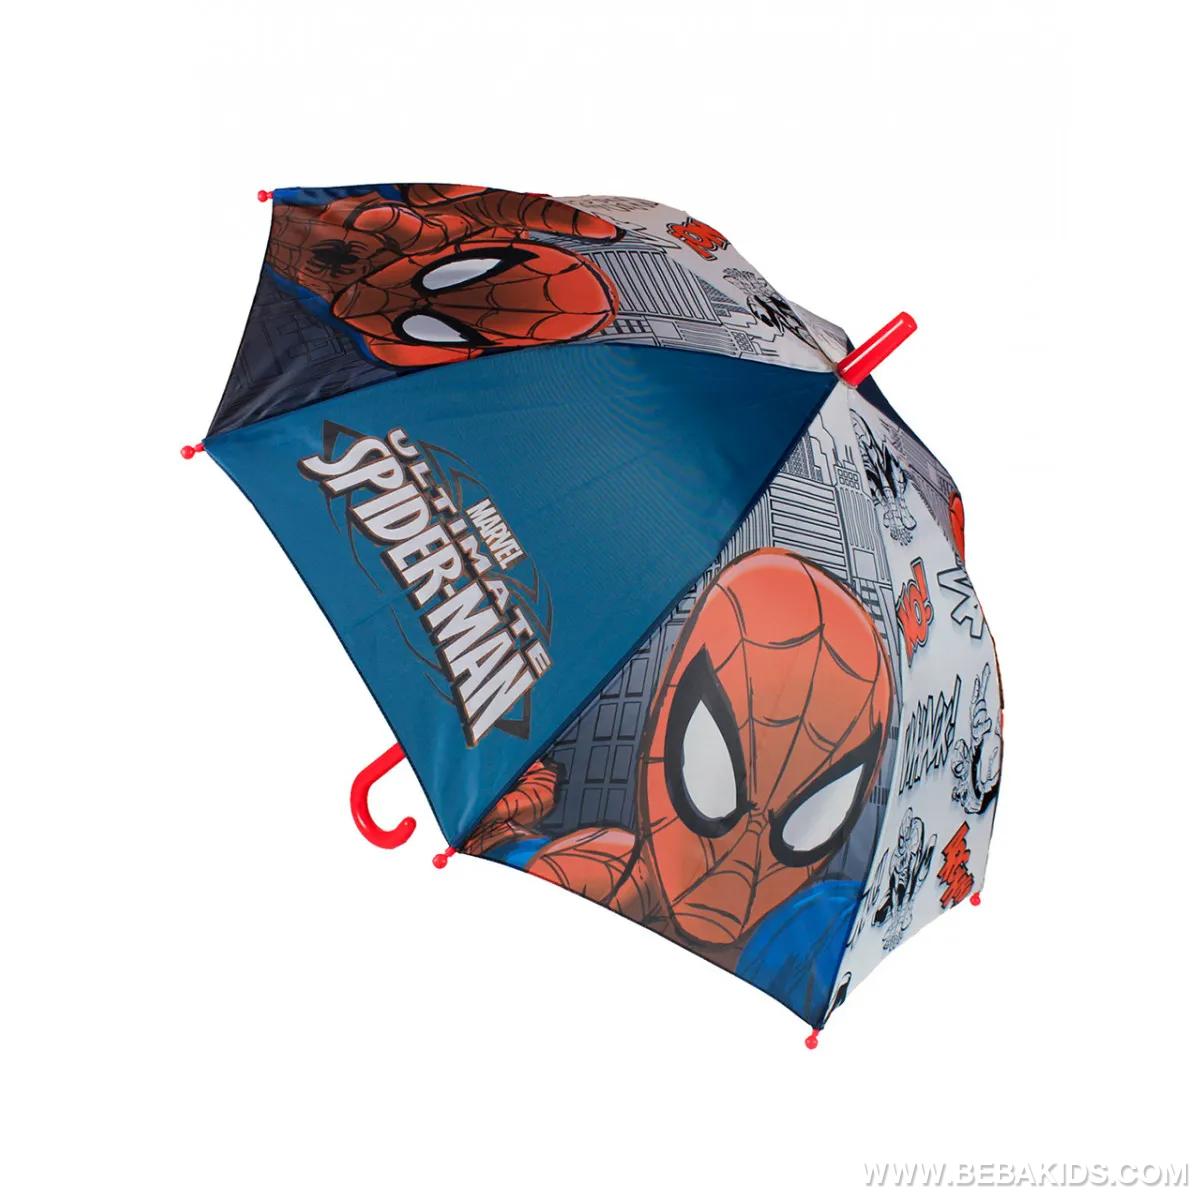 Kišobran Spiderman 45 cm jz 16